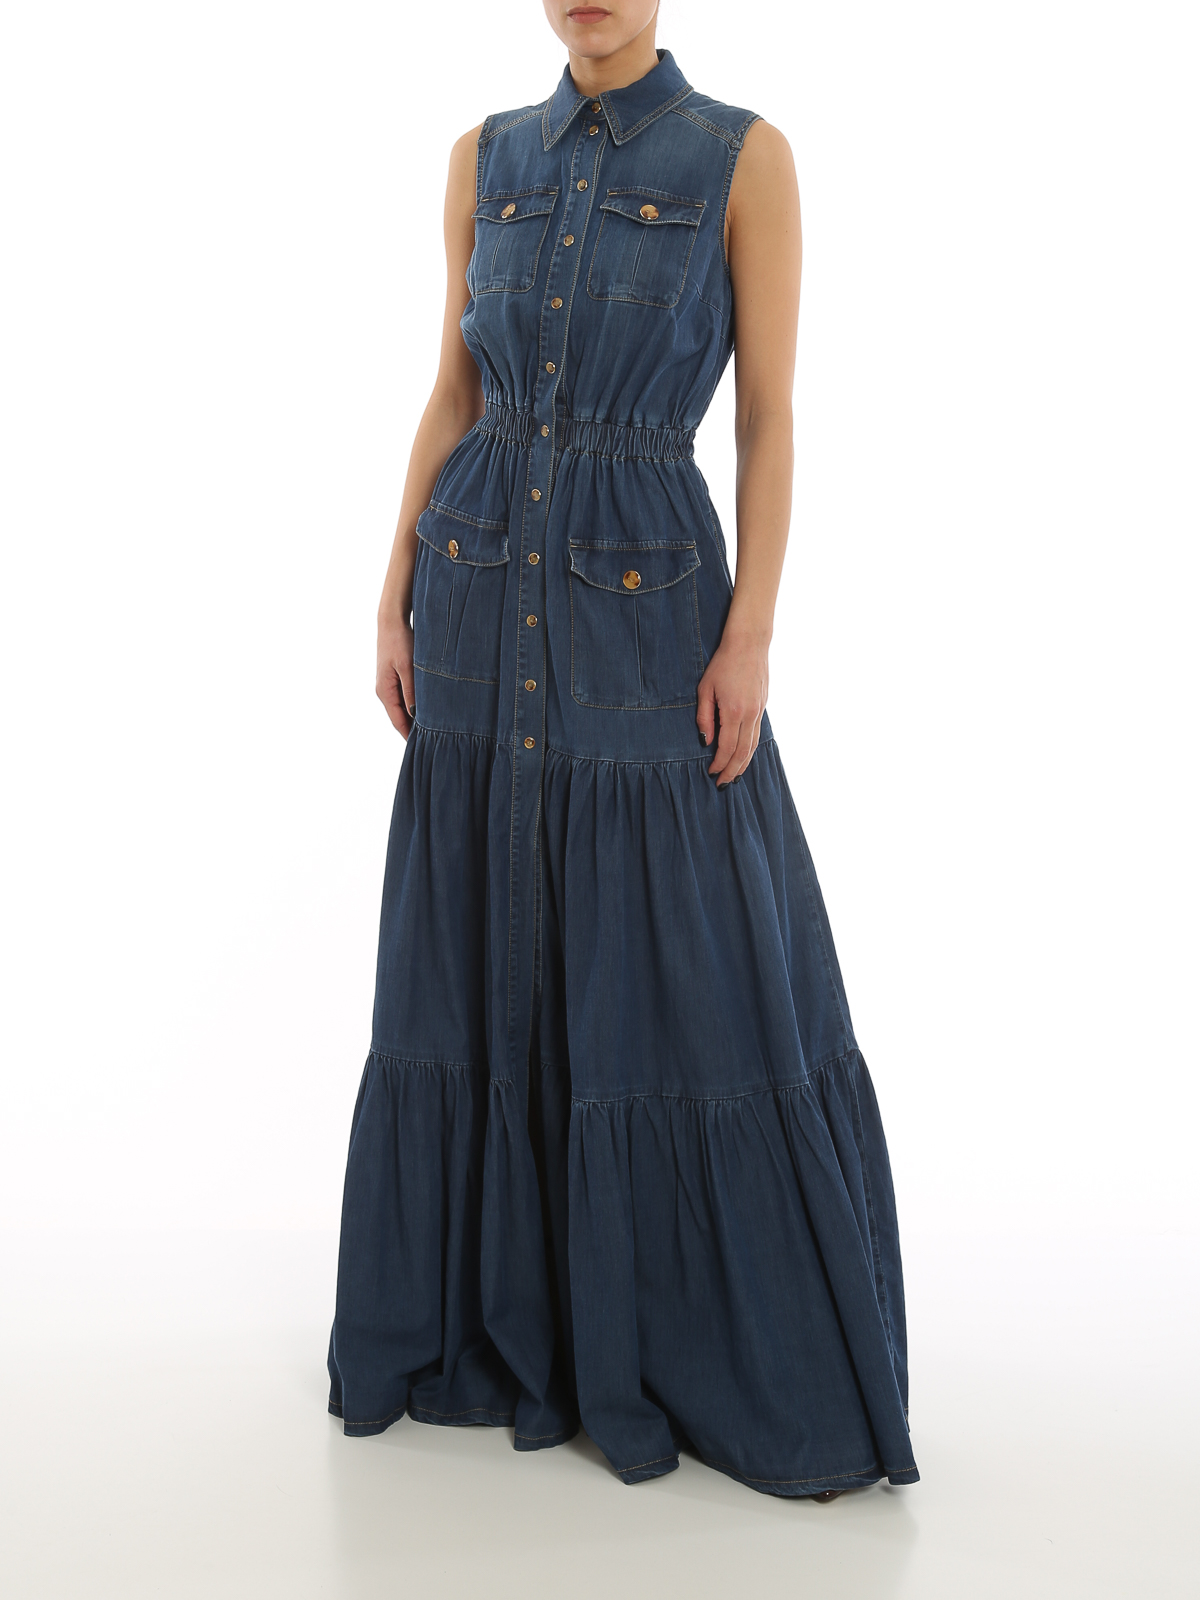 Buy Gap Organic Cotton High Neck Sleeveless Denim Maxi Dress from the Gap  online shop